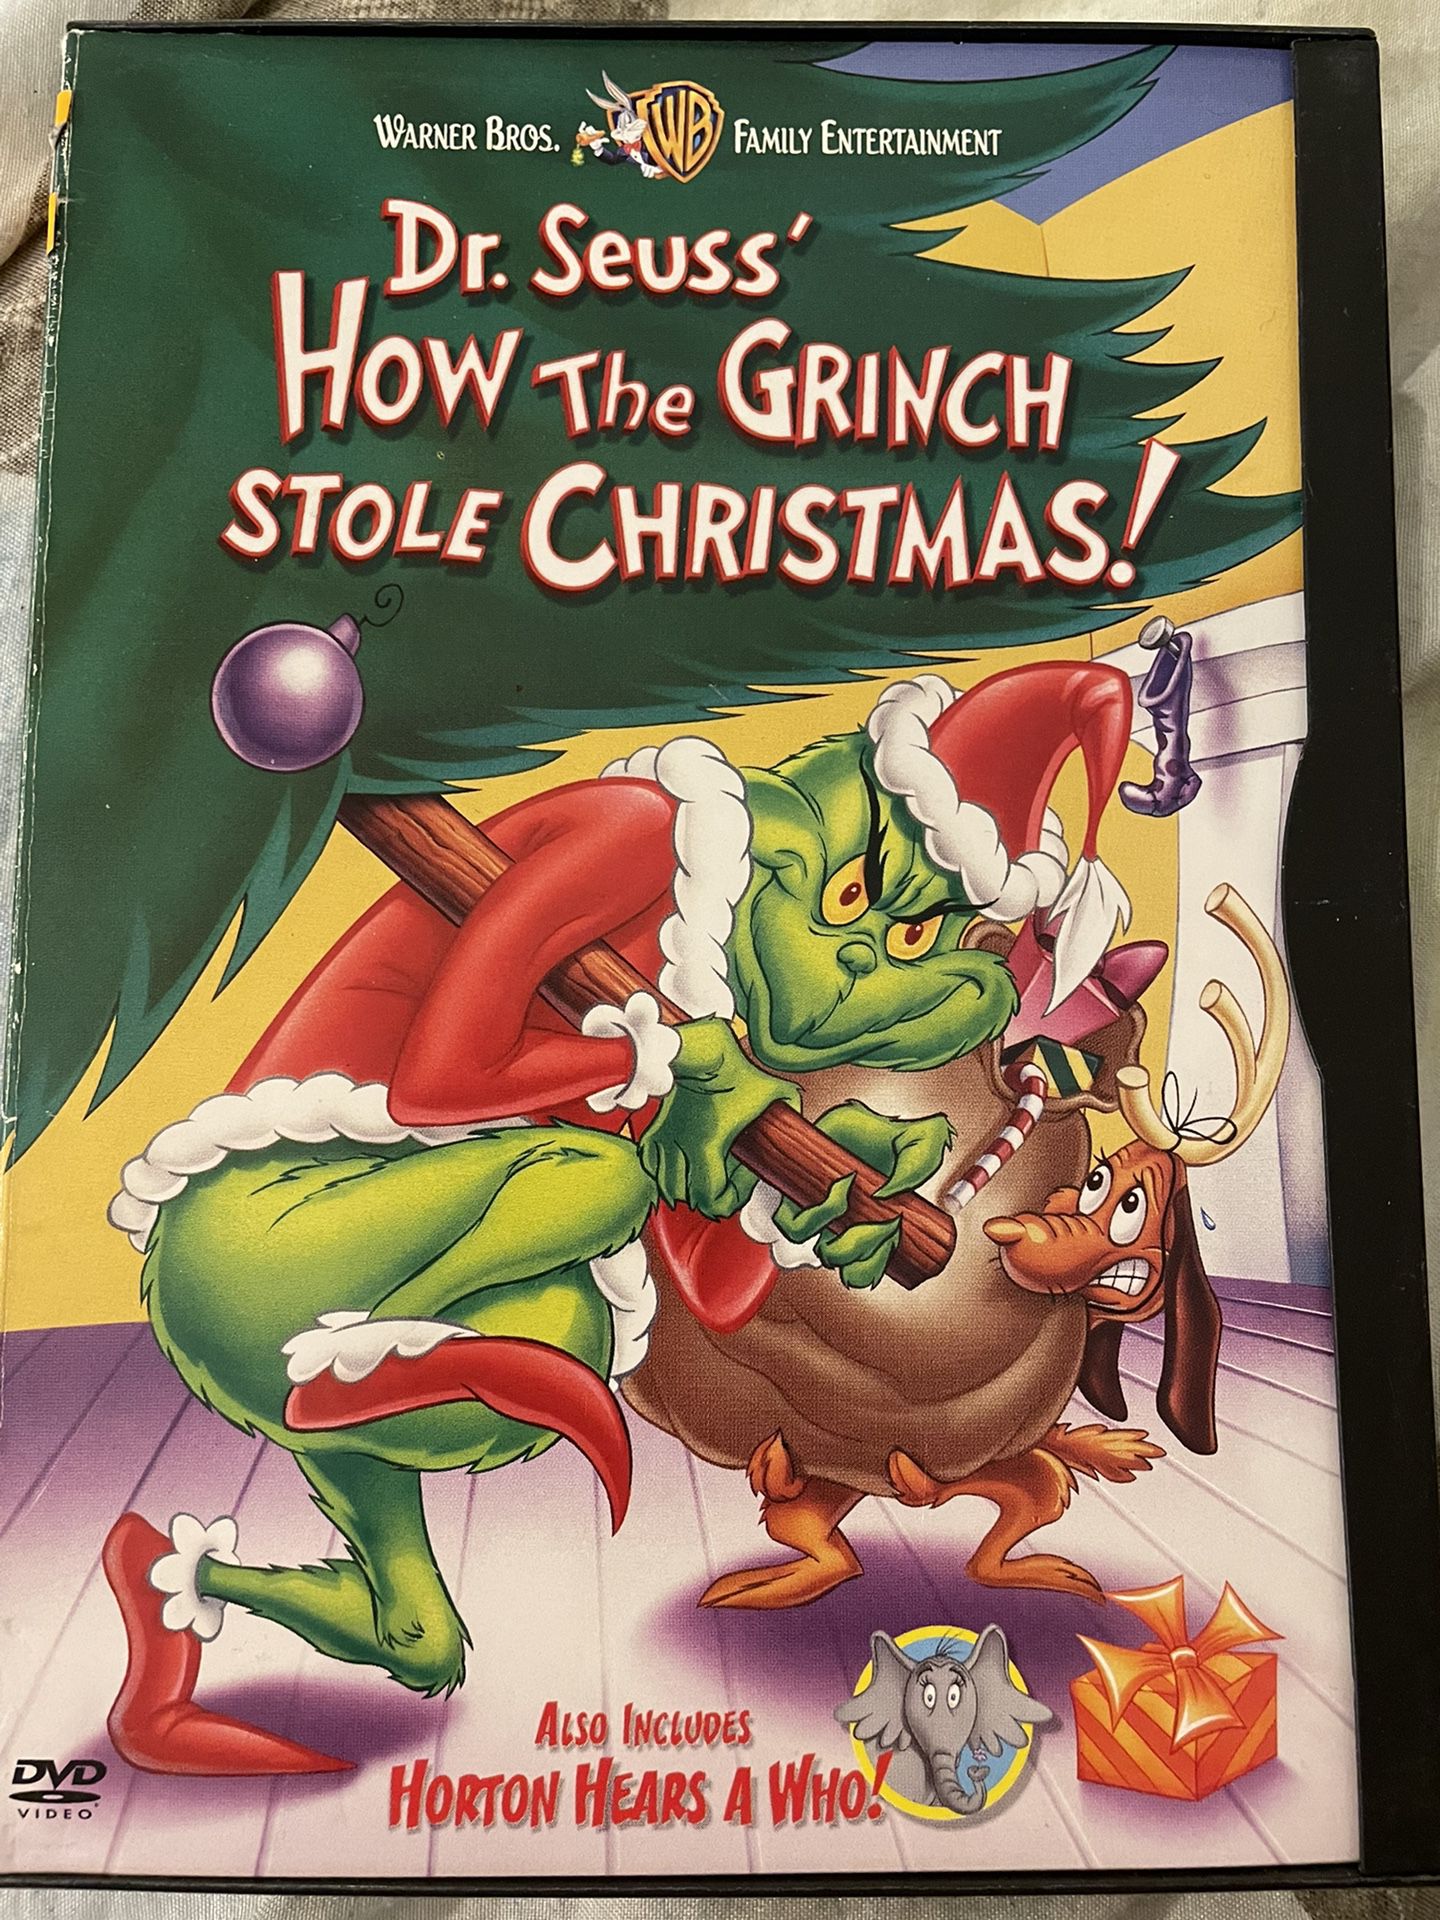 Dr. SEUSS’ HOW THE GRINCH STOLE CHRISTMAS! (DVD)